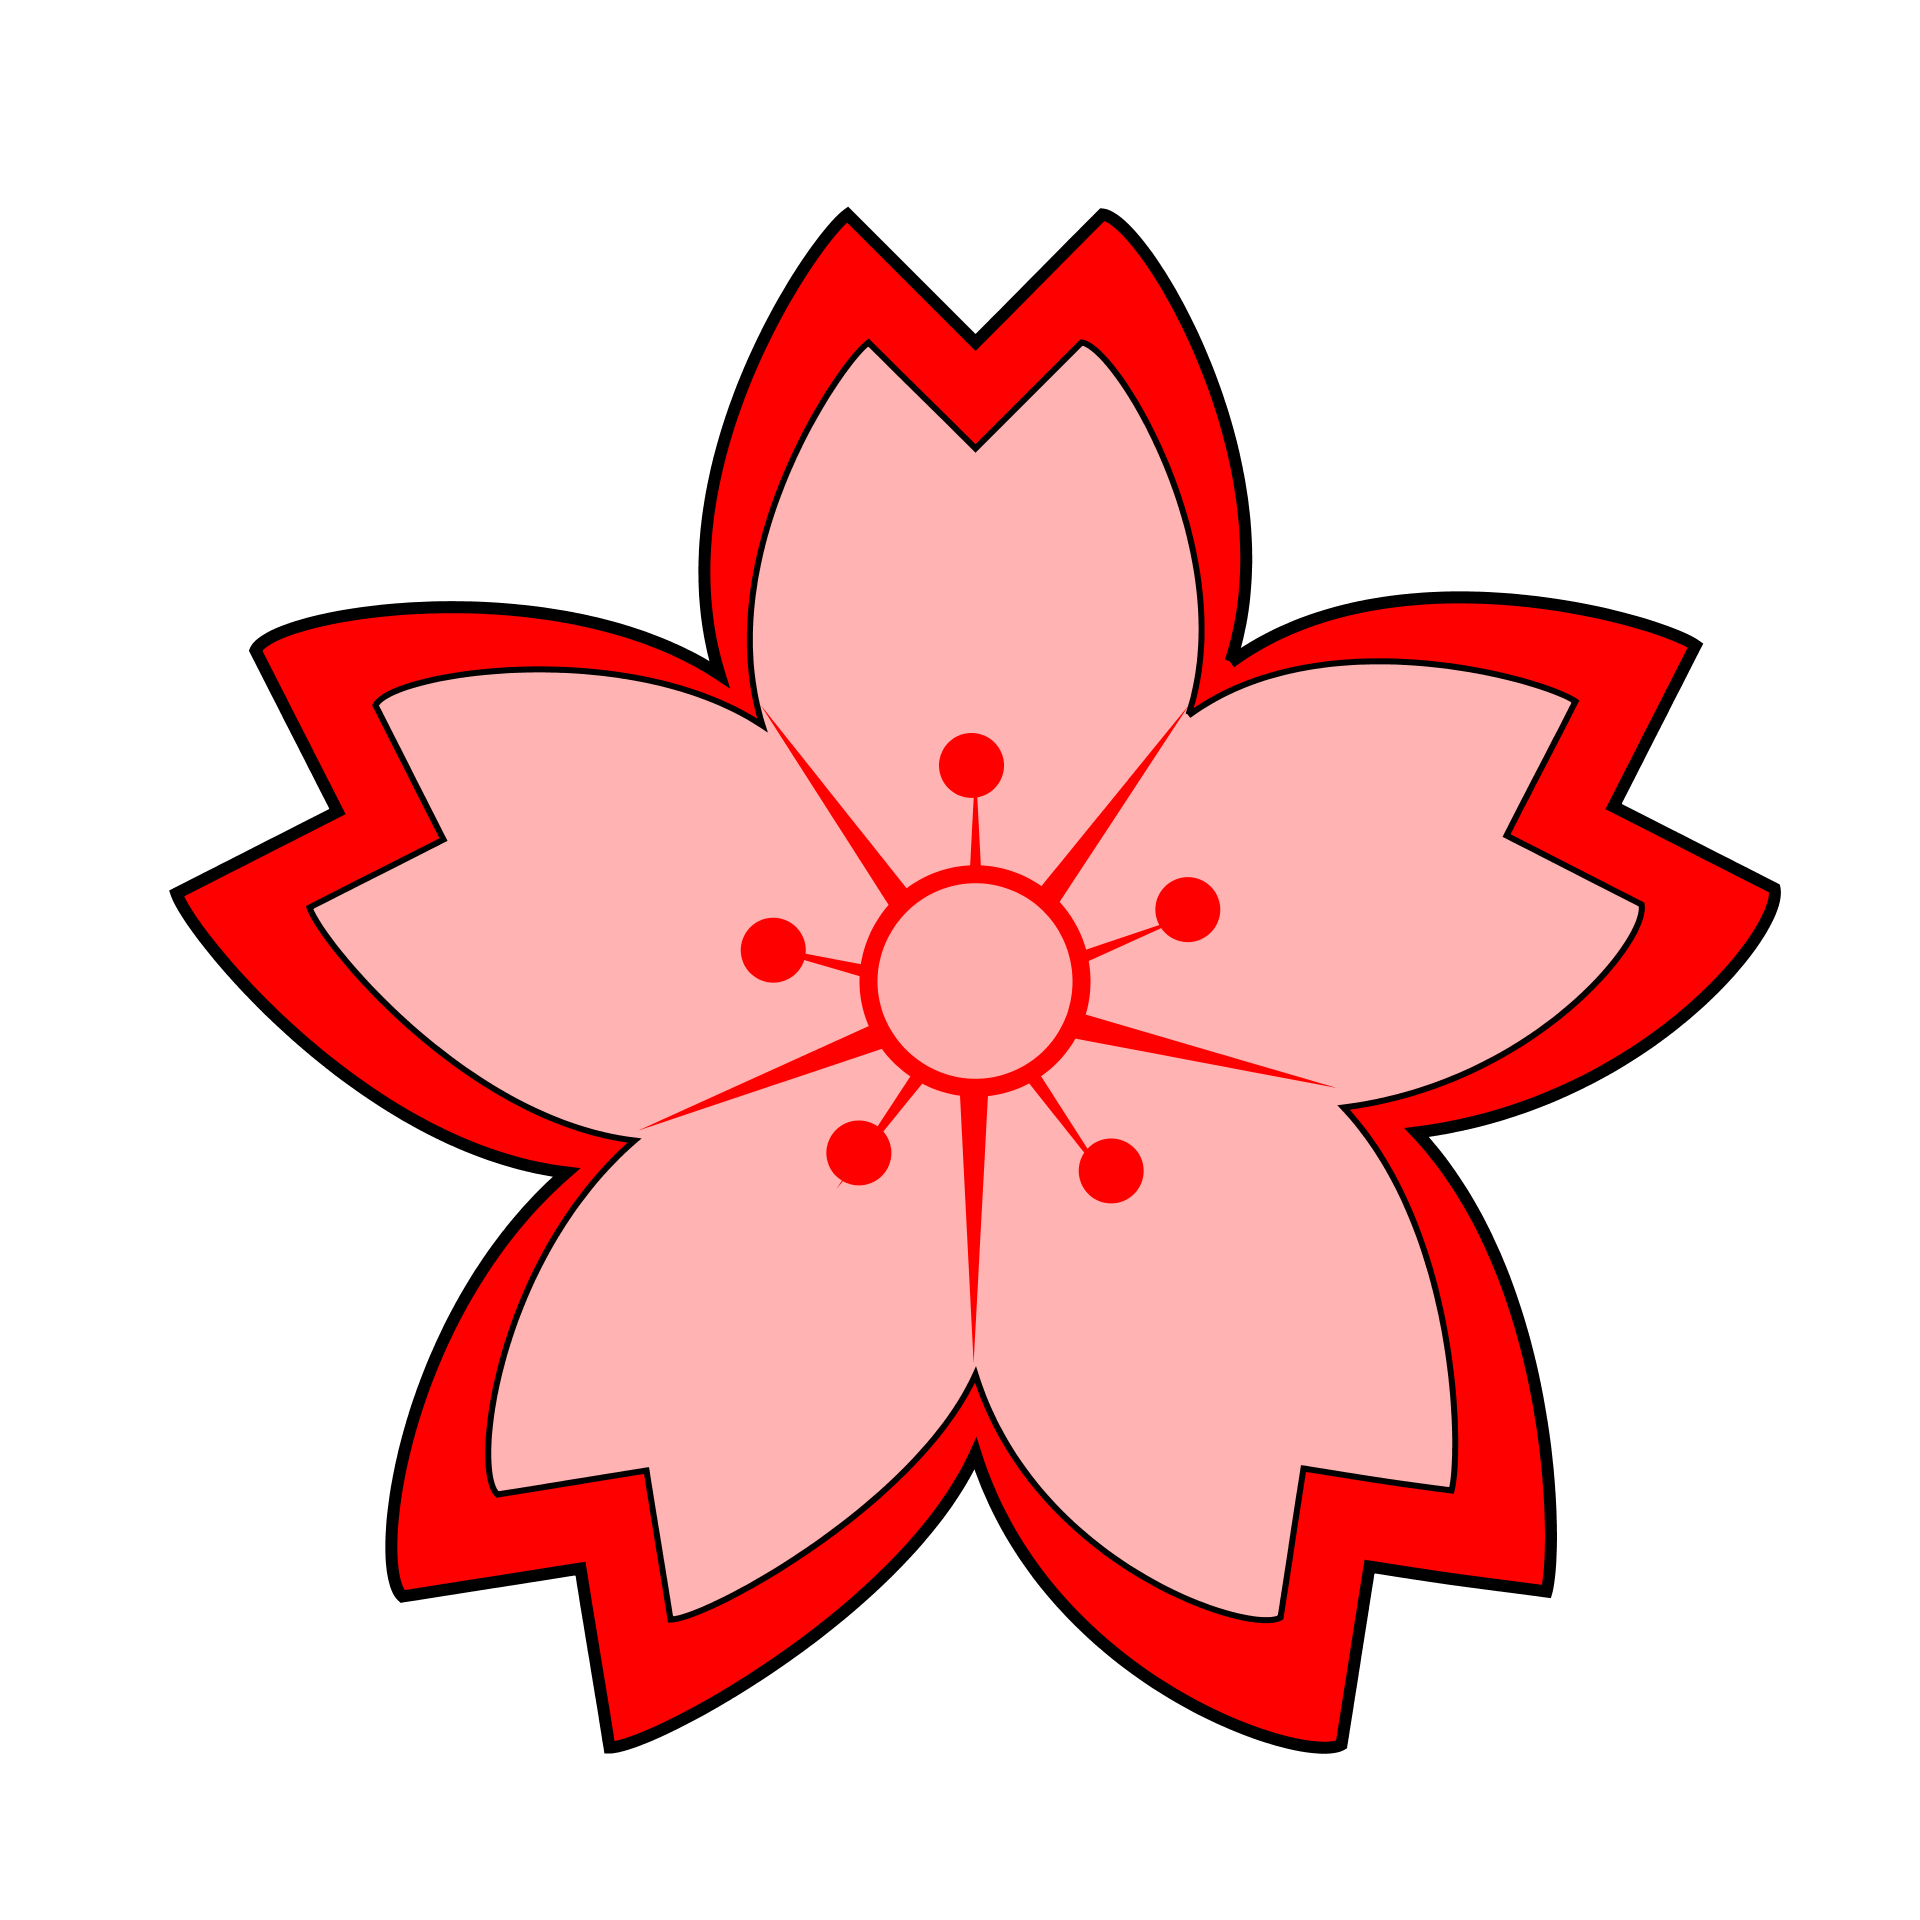 Flower clipart shape. Sakura panda free images